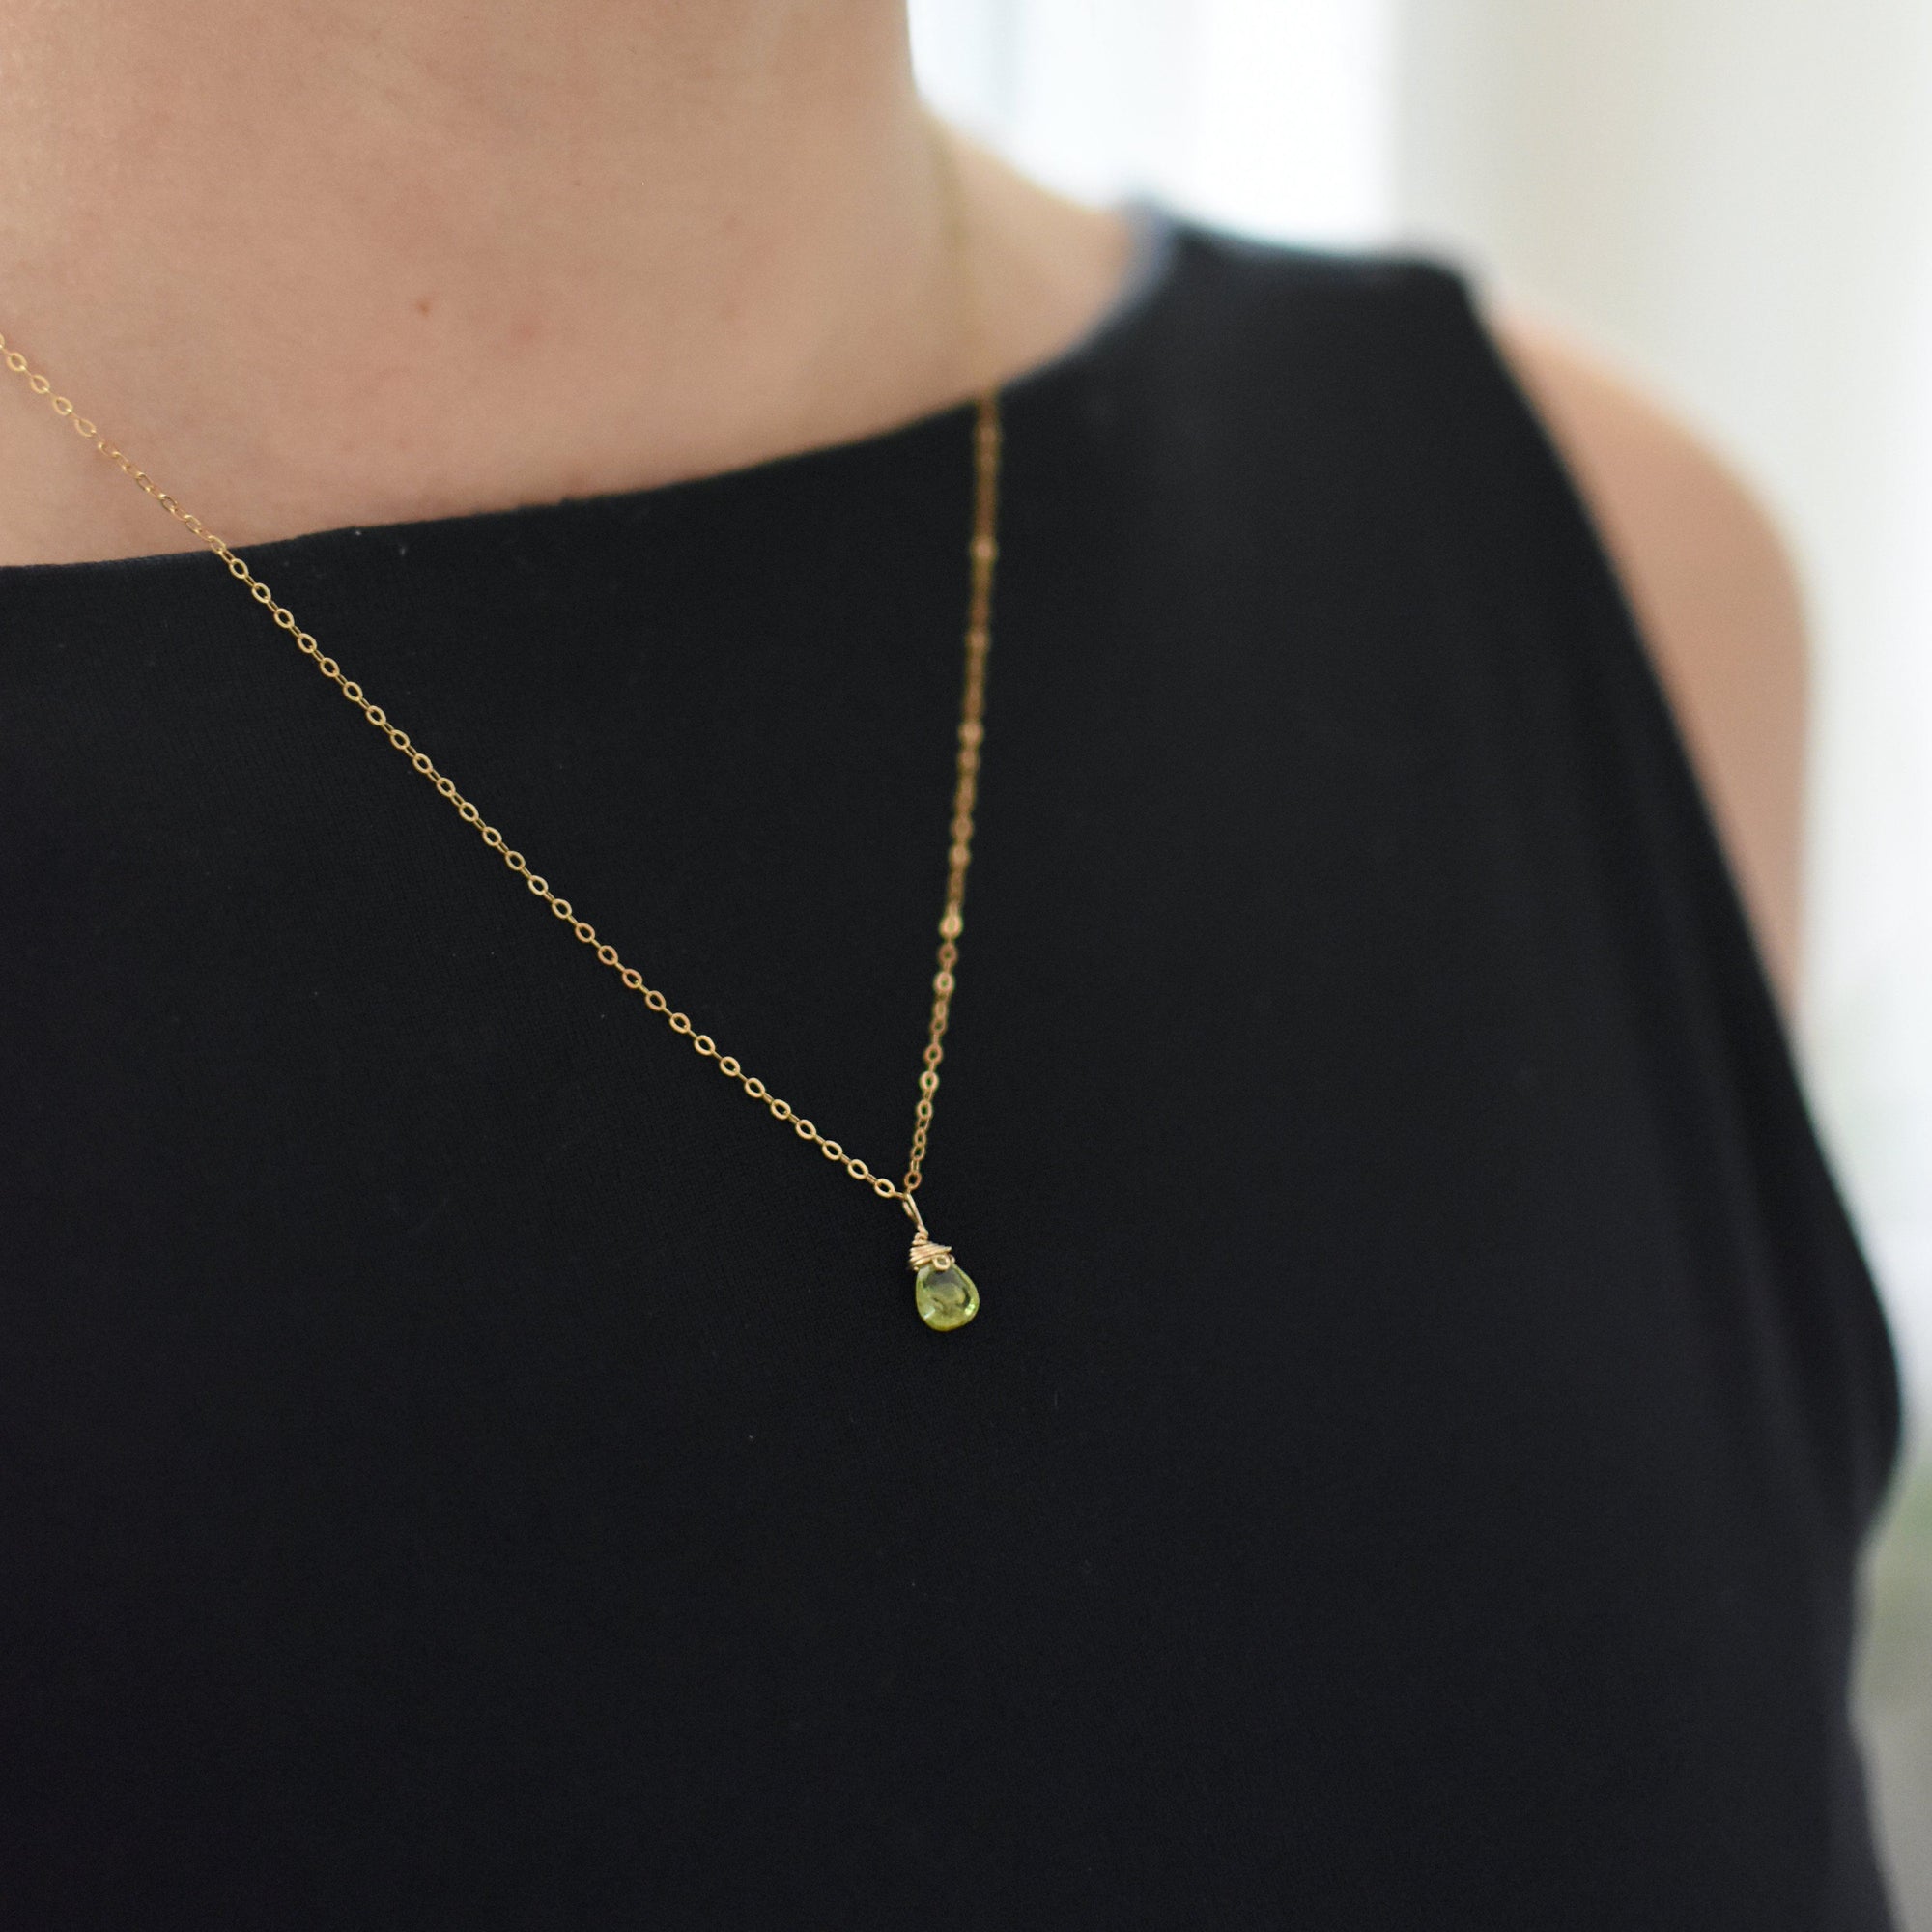 Raw Peridot Charm Necklace - 14K Gold-Filled DesignsbyNatureGems